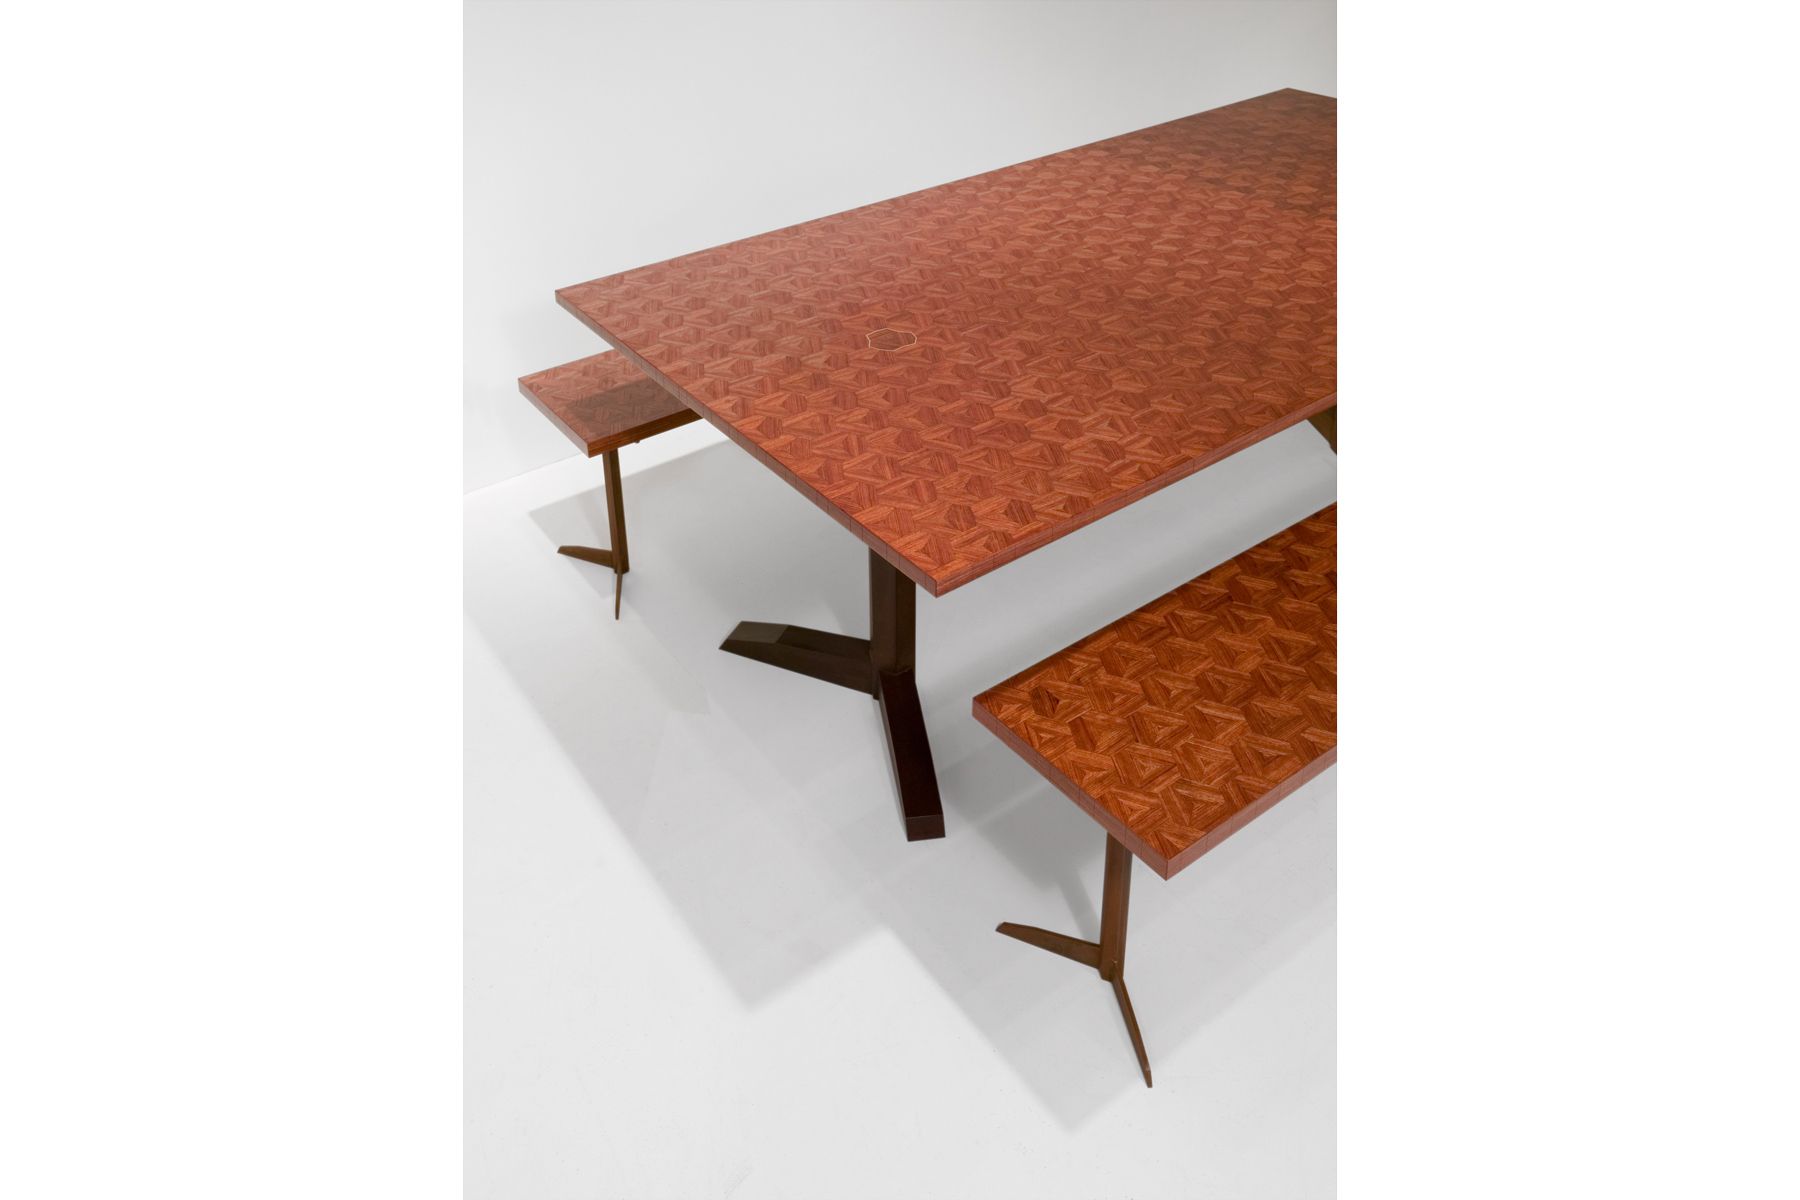 1aaron_levine_contemporary_modern_studio_furniture_maker_wood_steel_metal_woodworker_art_artist_northwest_marquetry_parquetry_tessellation_balance_table_detail4.jpg